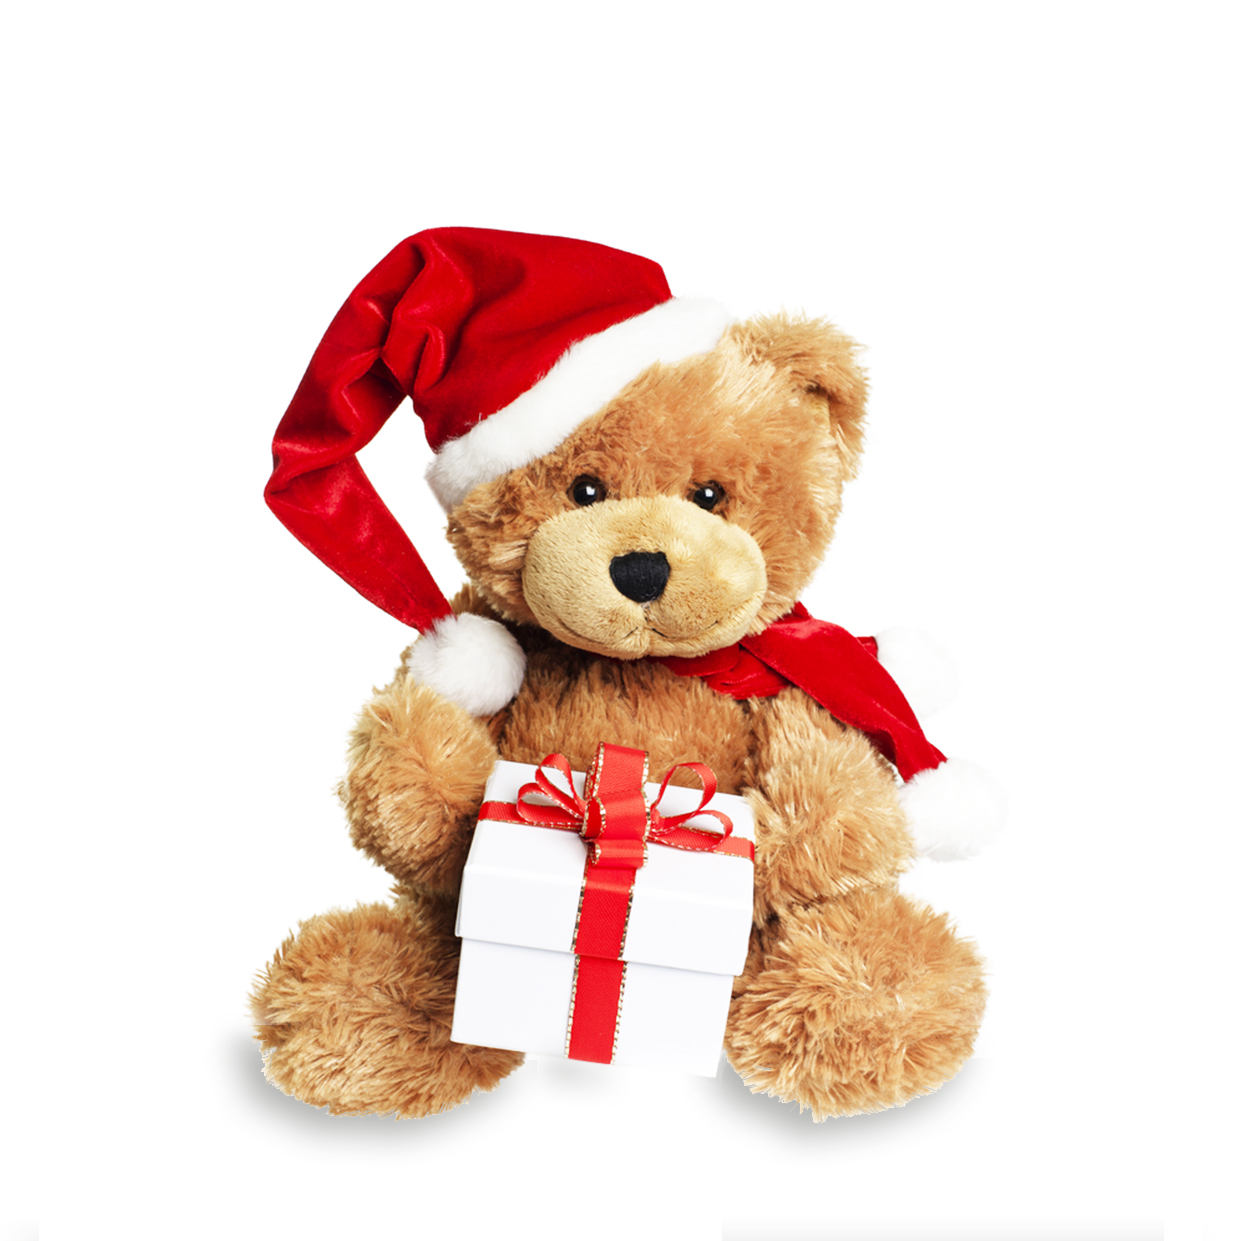 Christmas Teddy - sent on December 24th, 2021